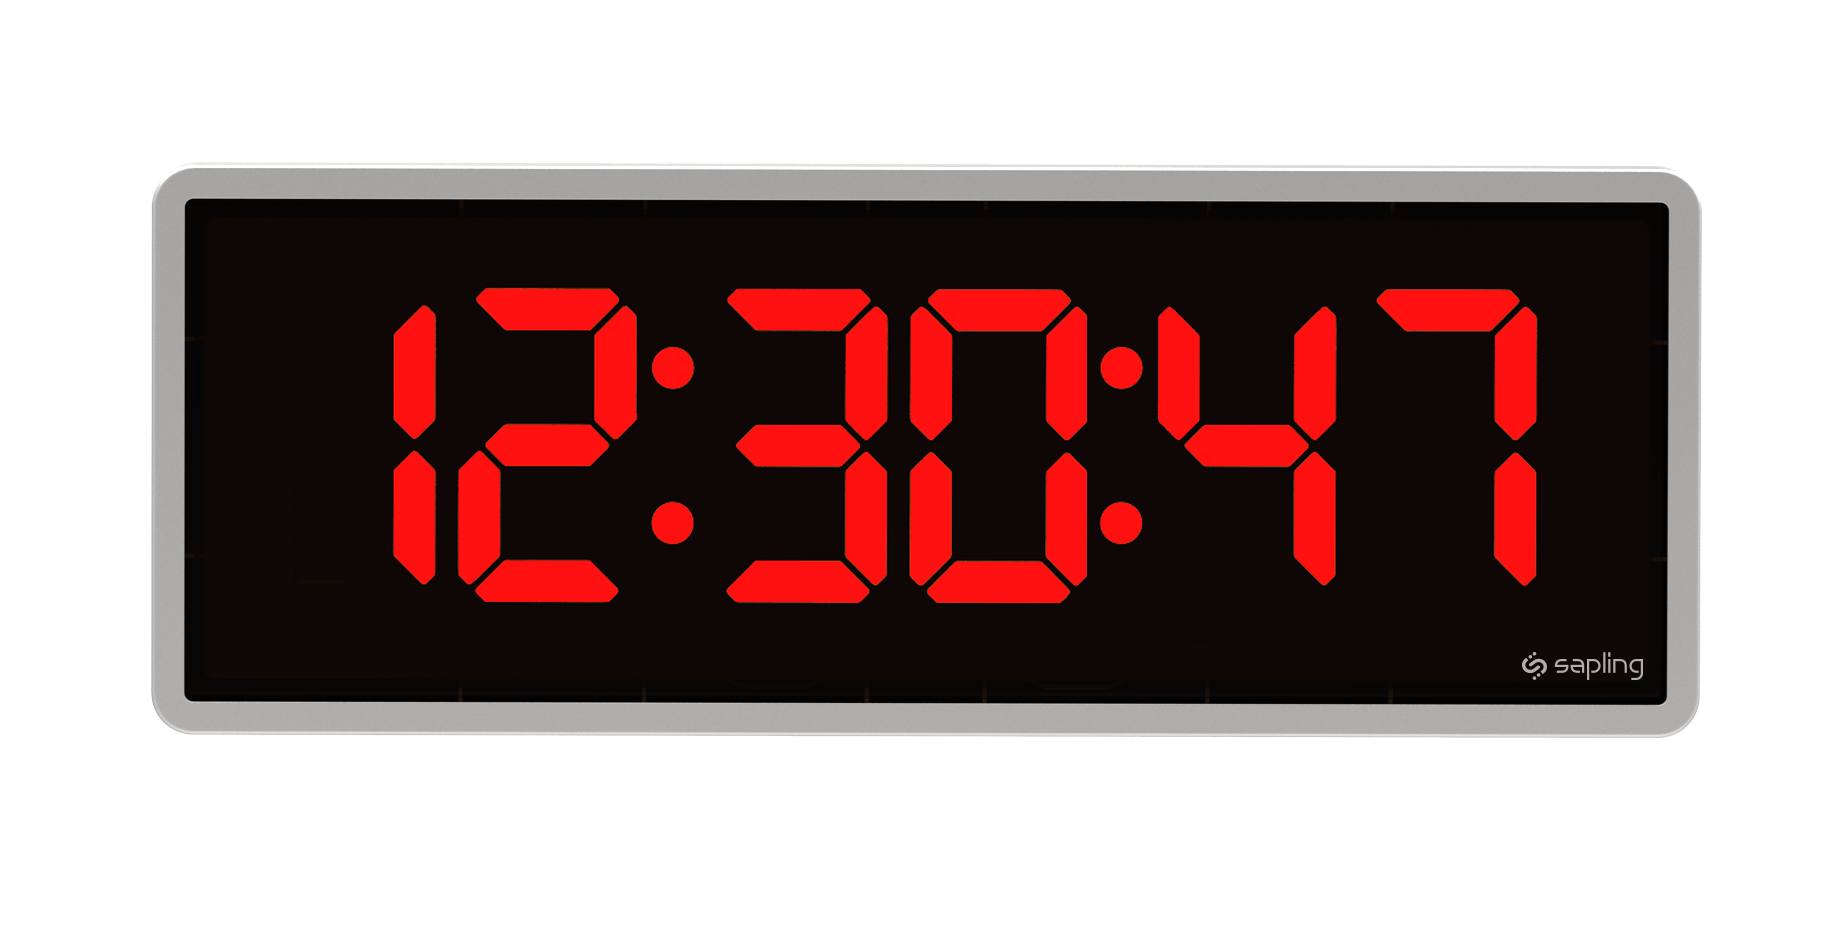 Цифровые часы циферблат. Таймер диджитал. Часы Digital Clock 200730138828.4. Часы настенные электронные. Цифровые часы.